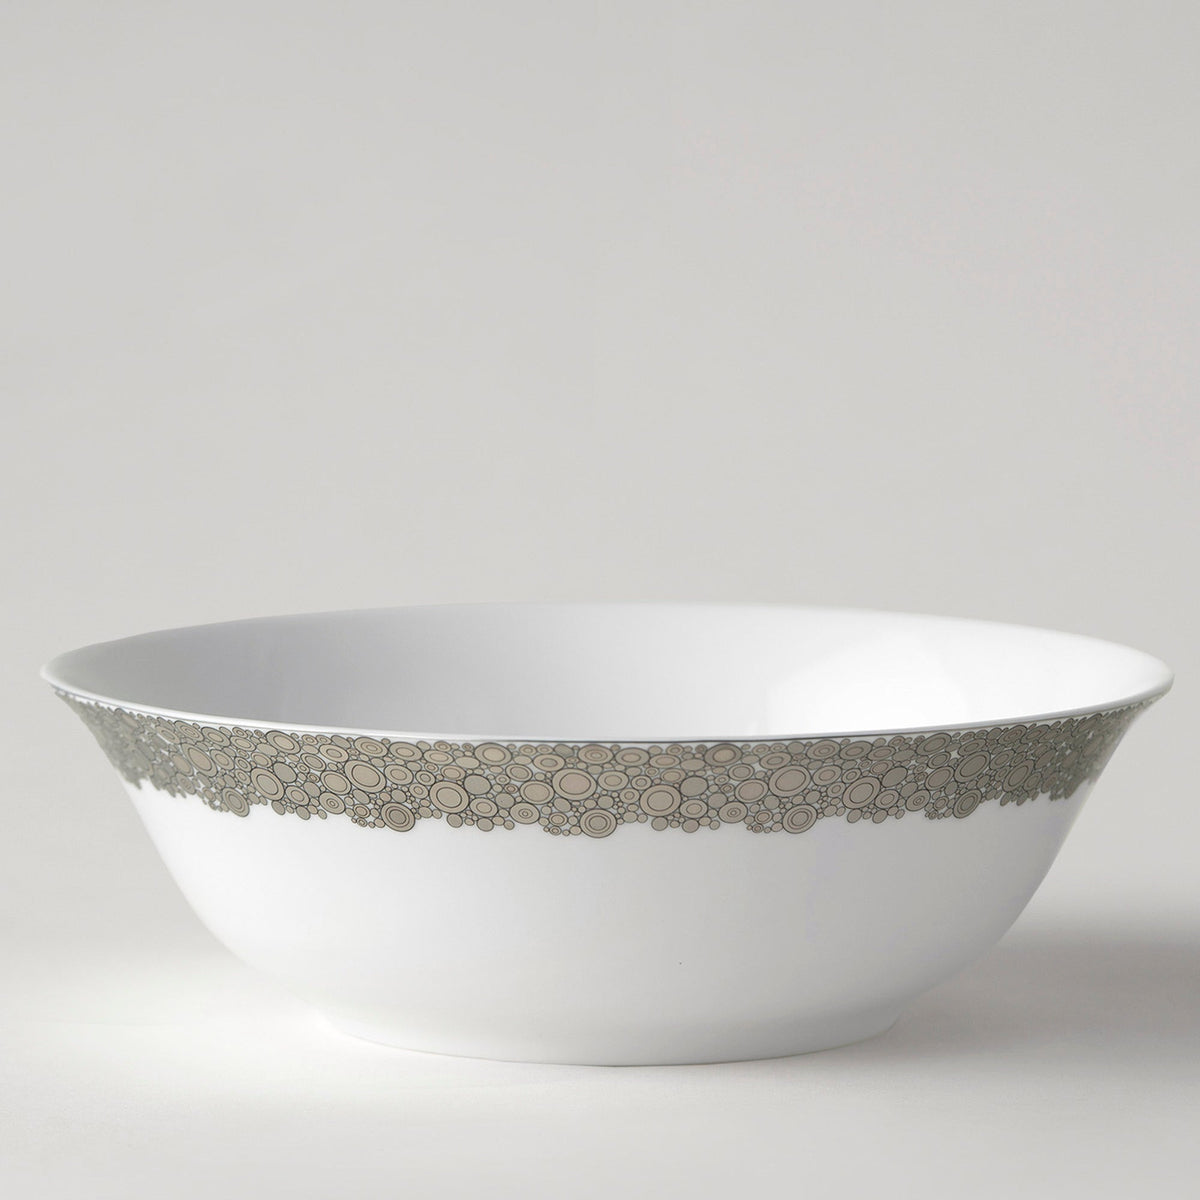 An Ellington Shine Platinum Serving Bowl by Caskata Artisanal Home, with a silver rim that shines.